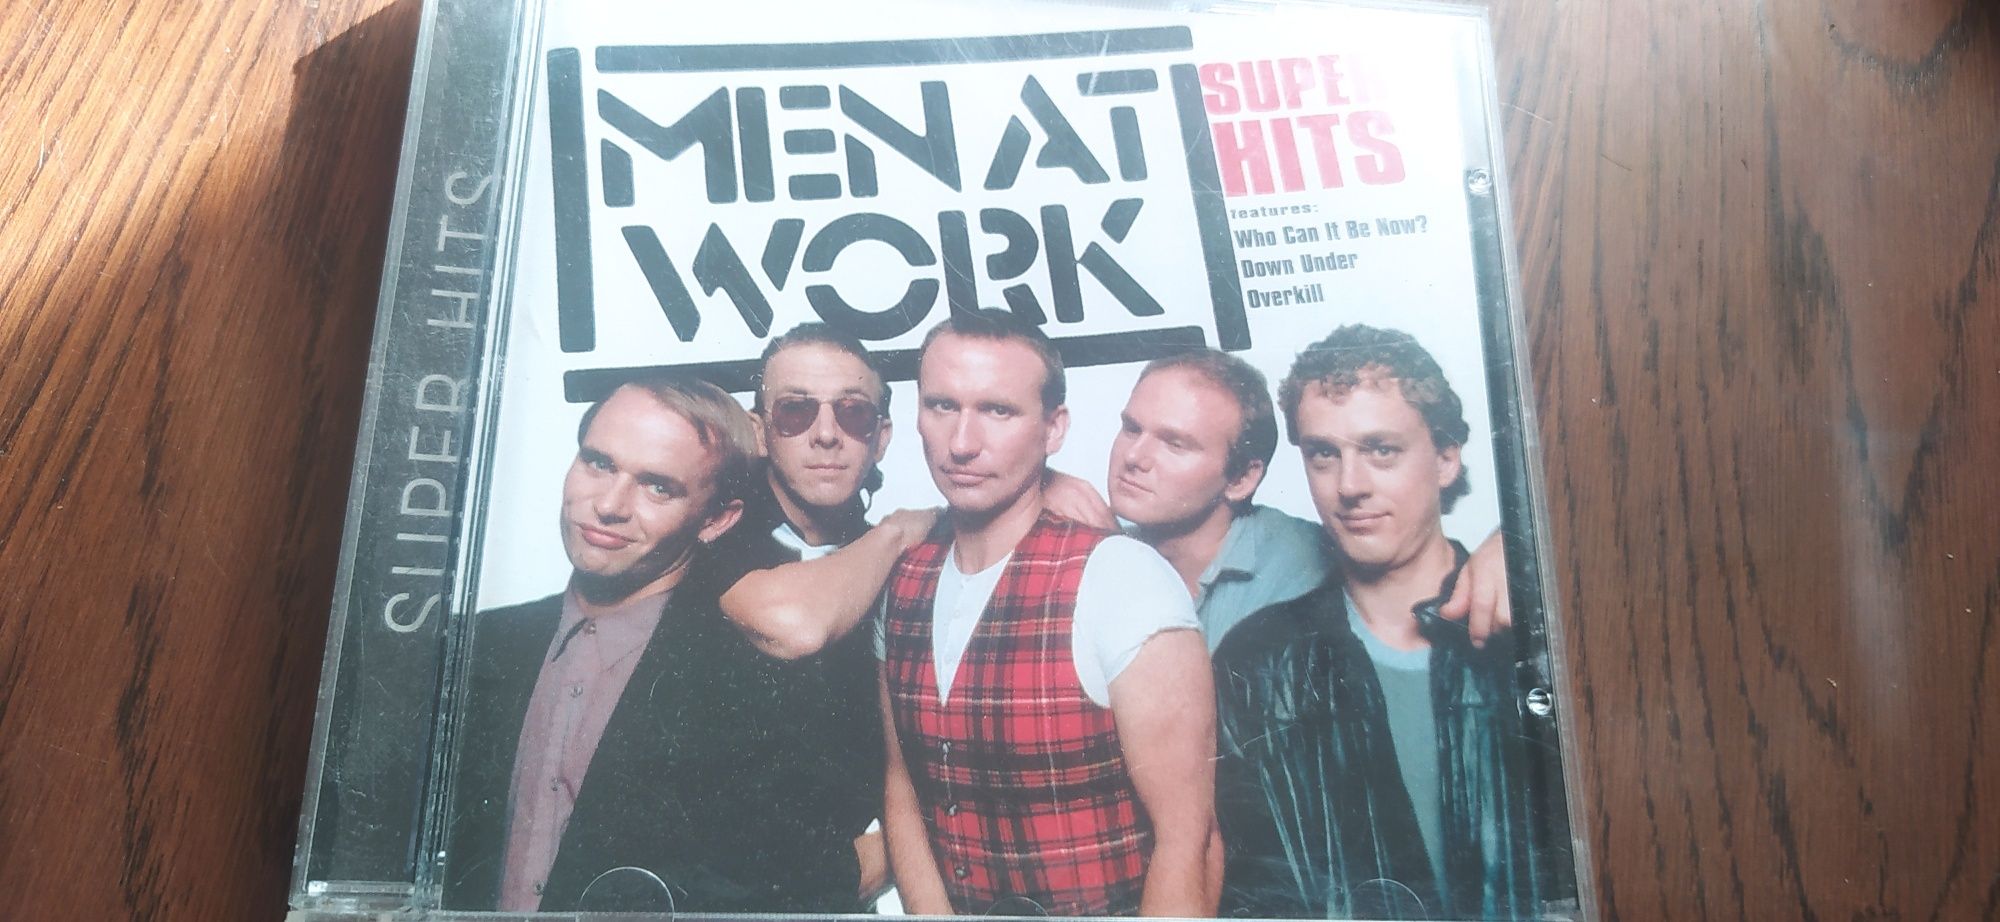 Menat Work super hits CD